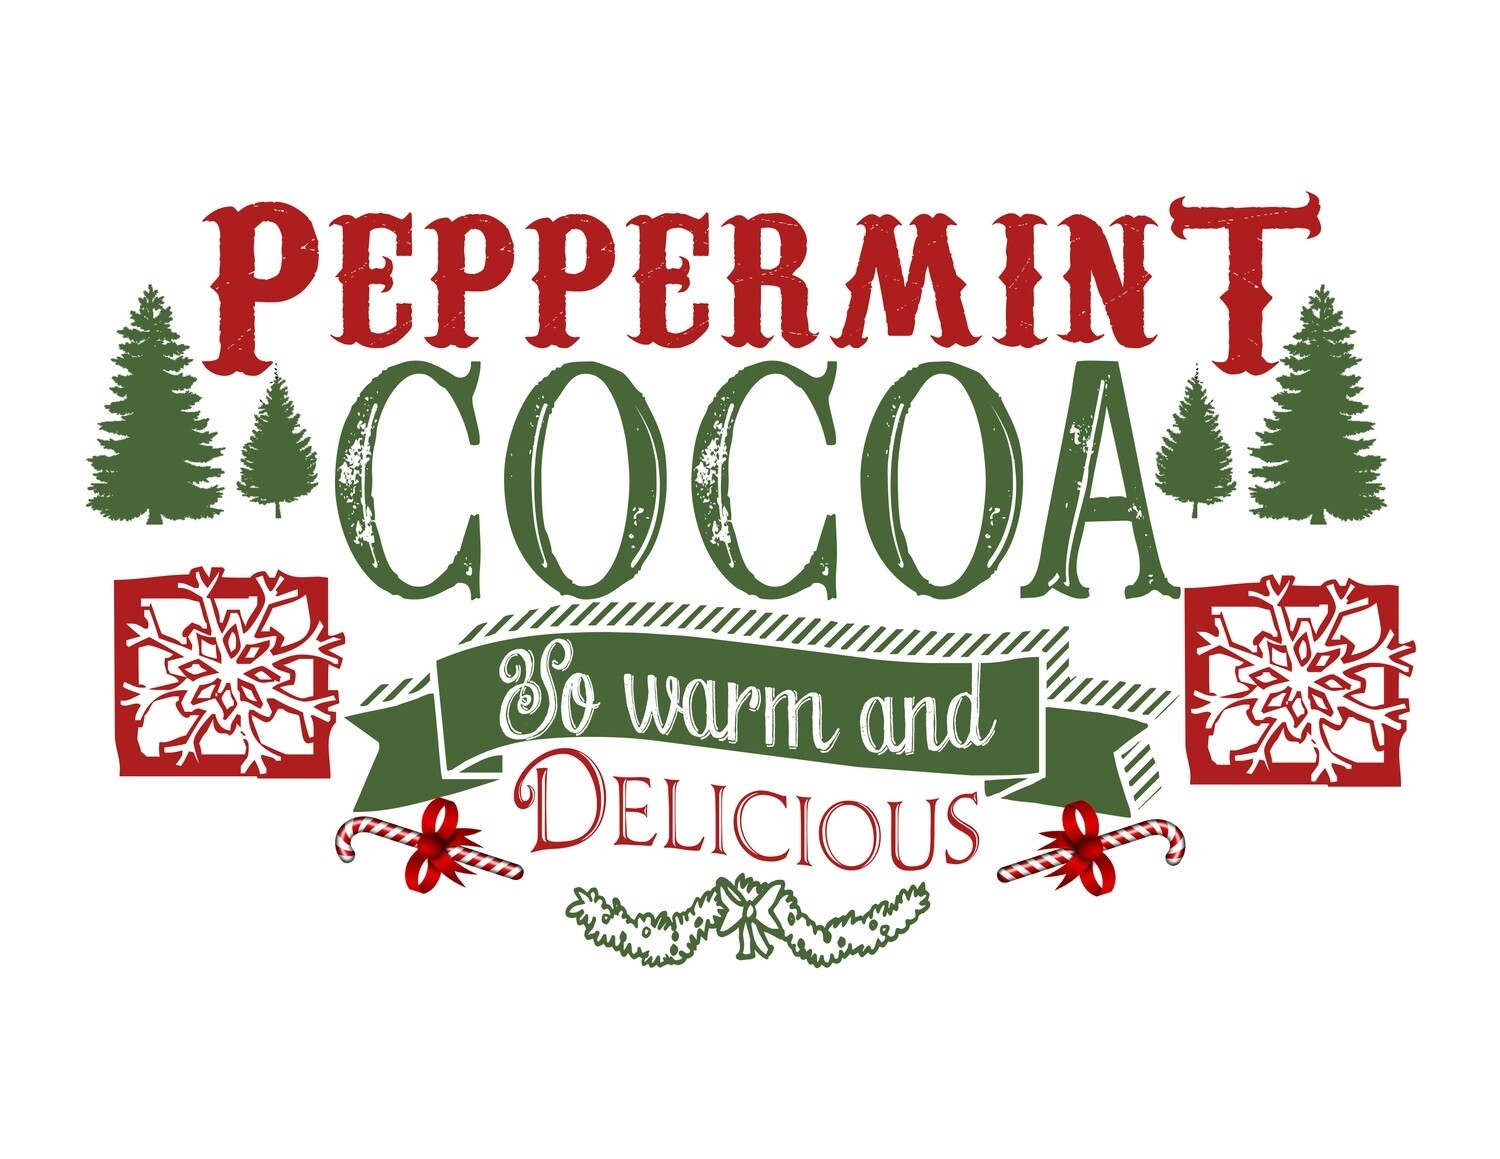 Peppermint Cocoa Free Printable Hot Chocolate Bar Free Halloween Printables I d Turn Back If I Were You Beth Bryan